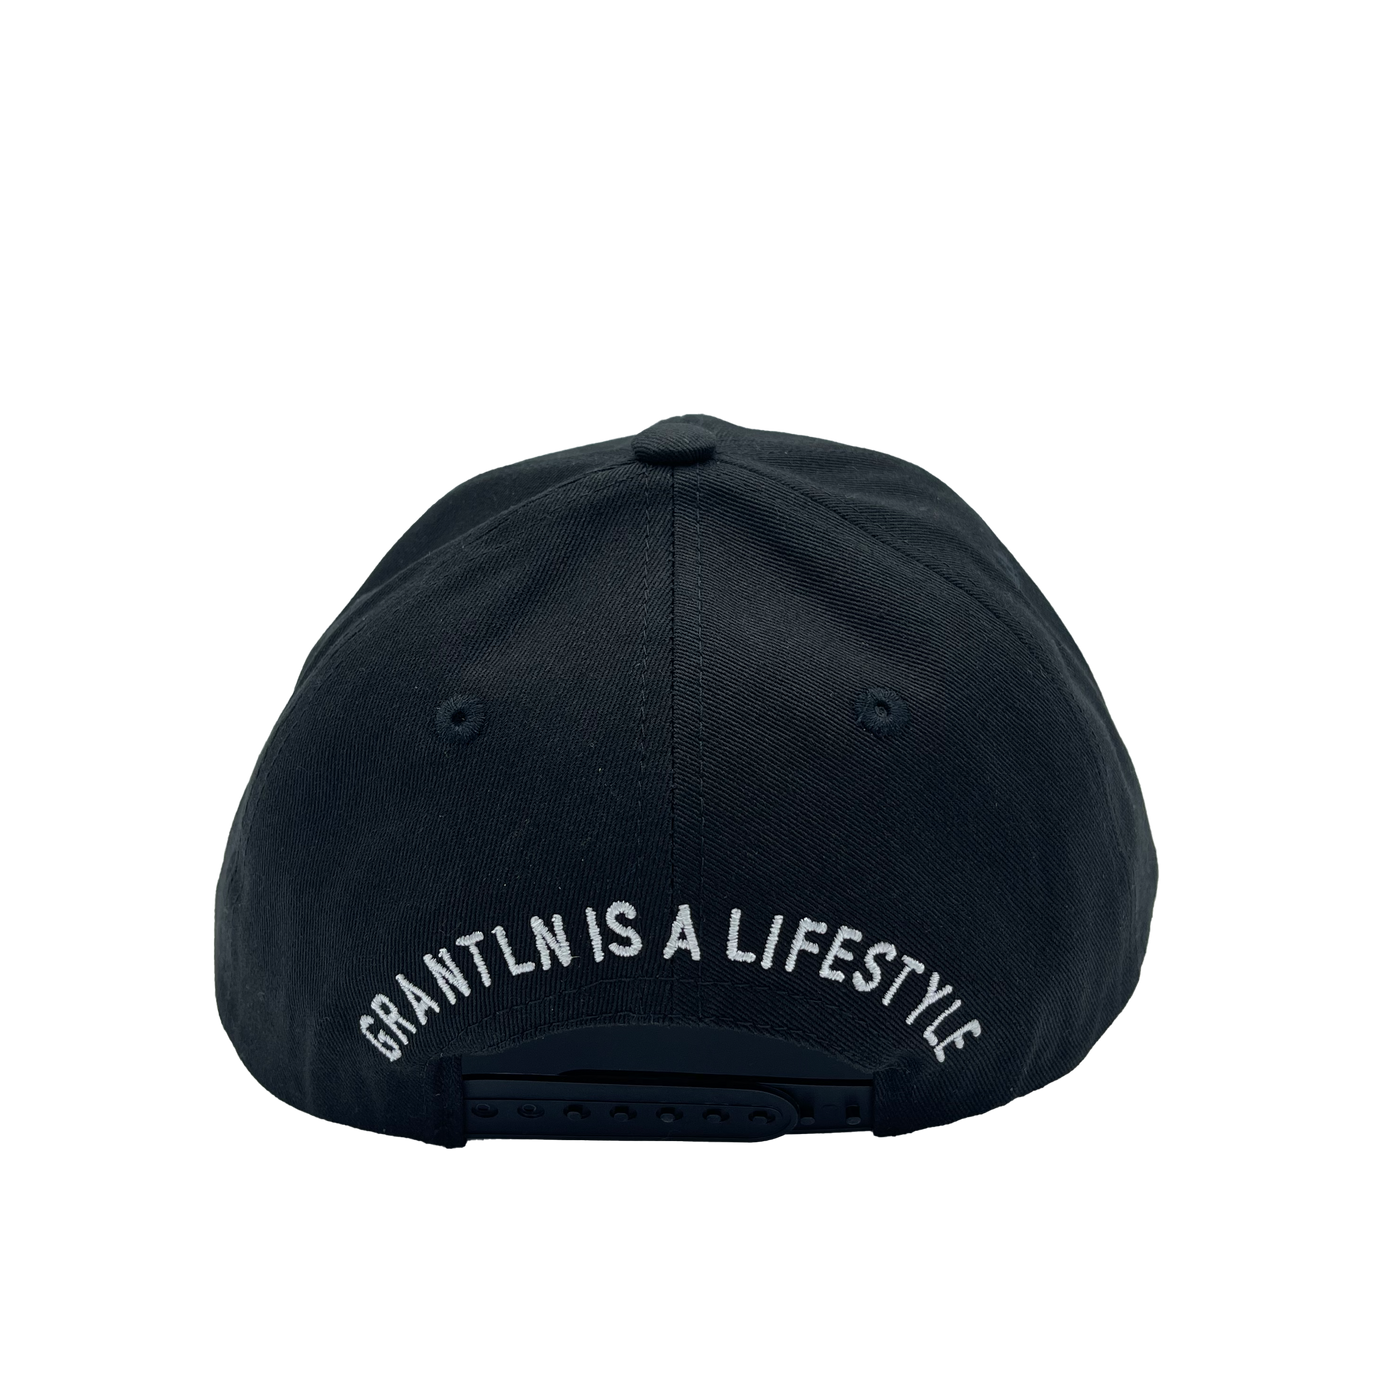 Grantler Curved Cap